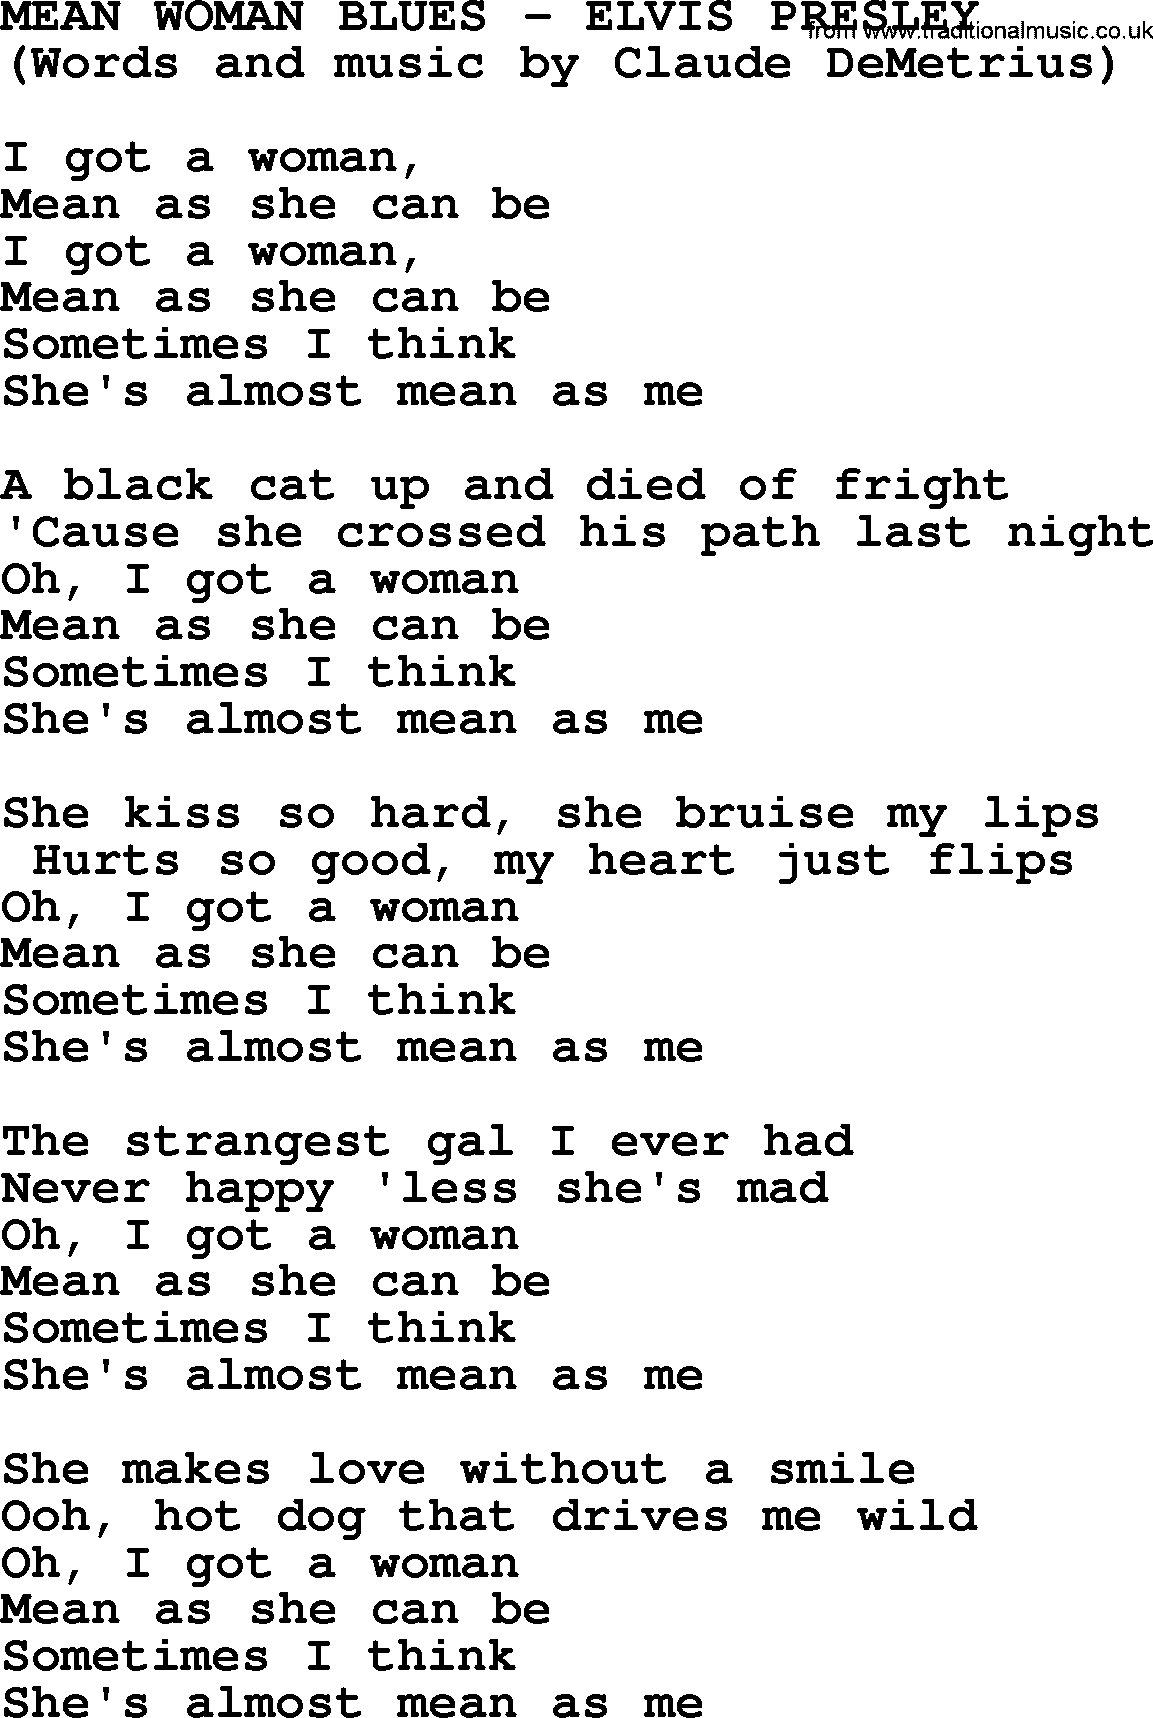 Elvis Presley song: Mean Woman Blues lyrics